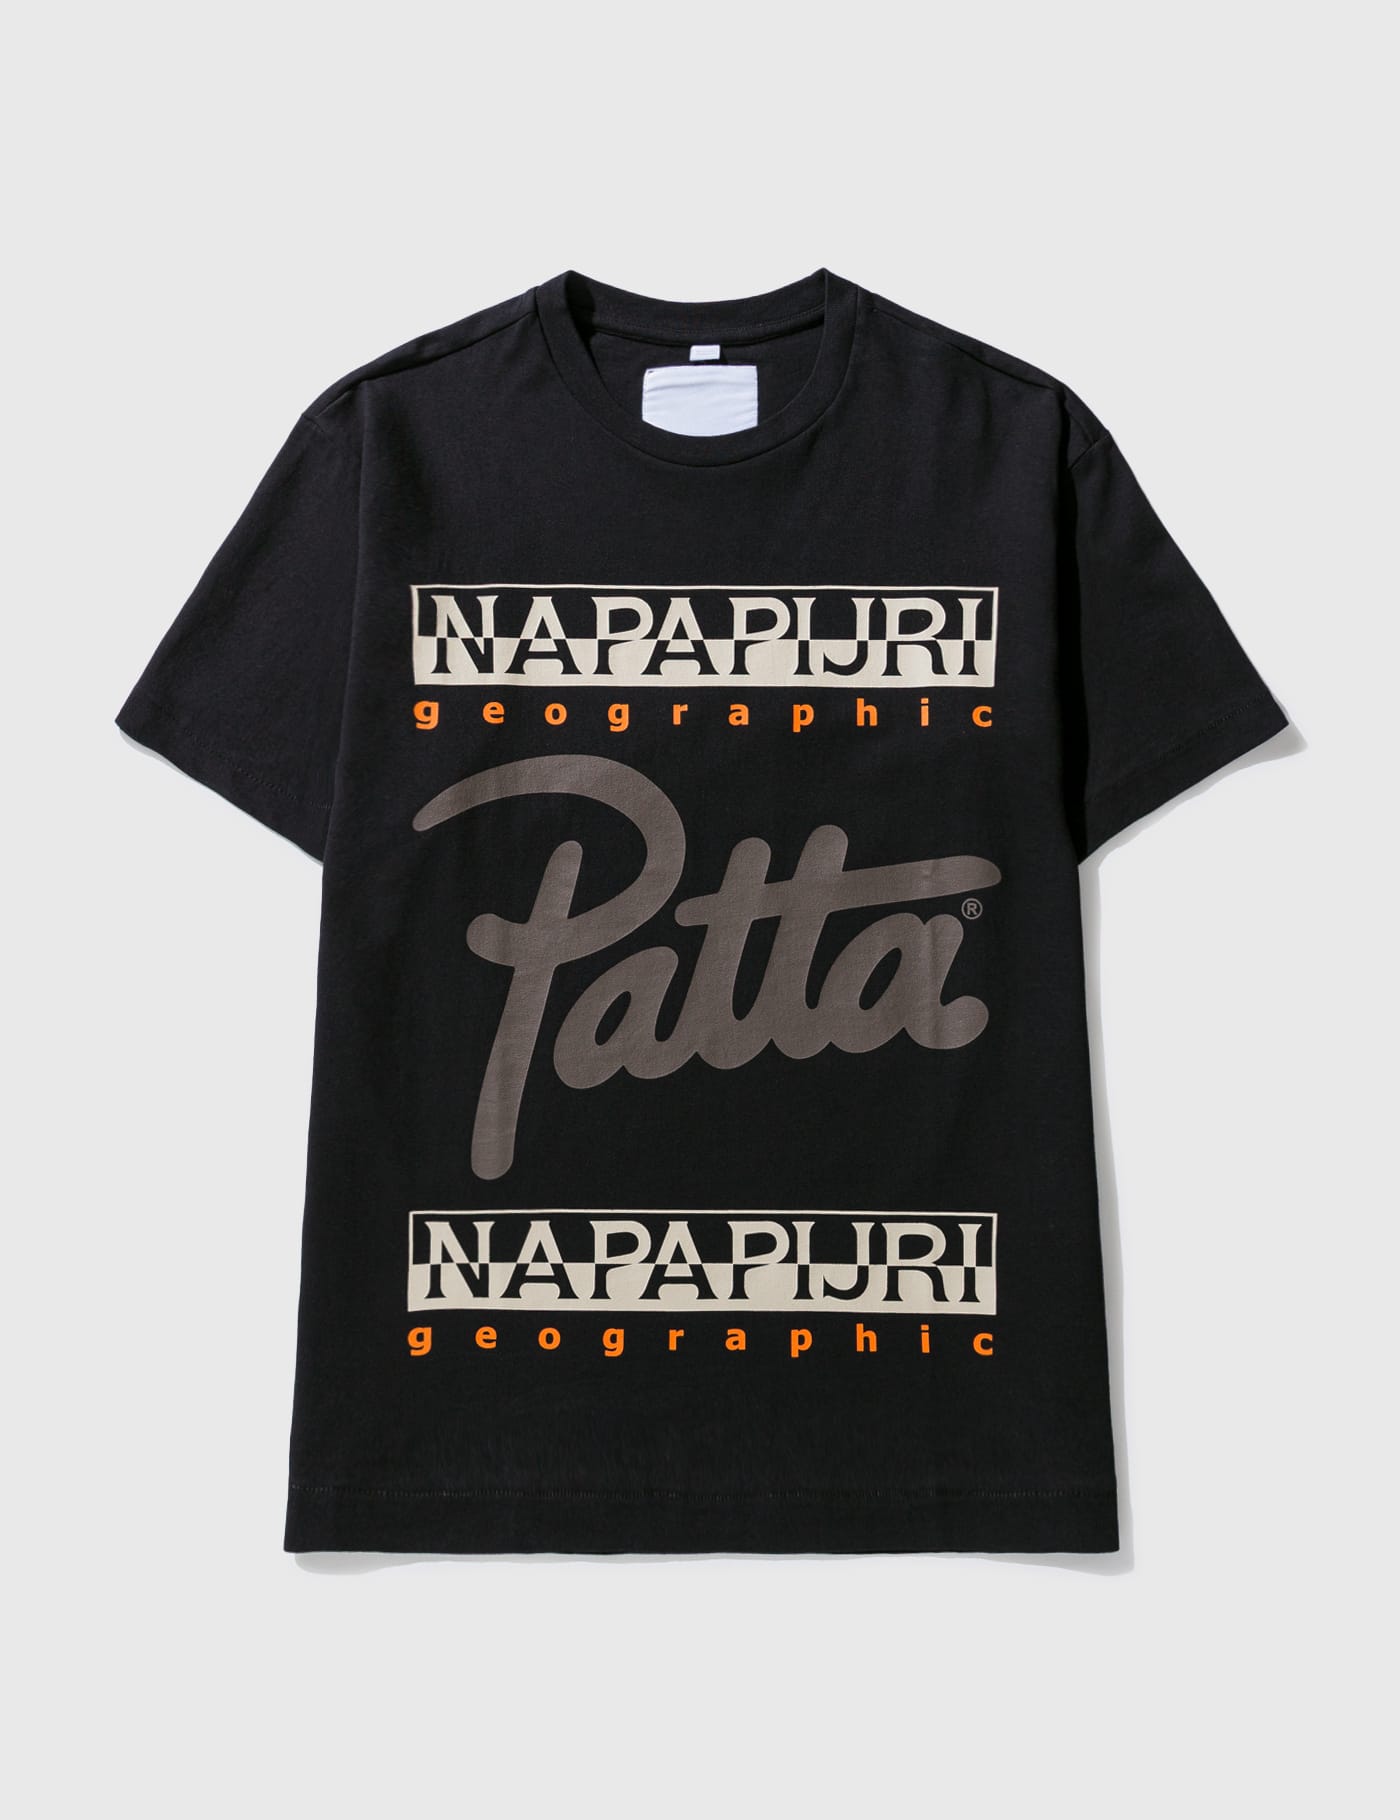 Napapijri - Napapijri x Patta T-shirt | HBX - Globally Curated 